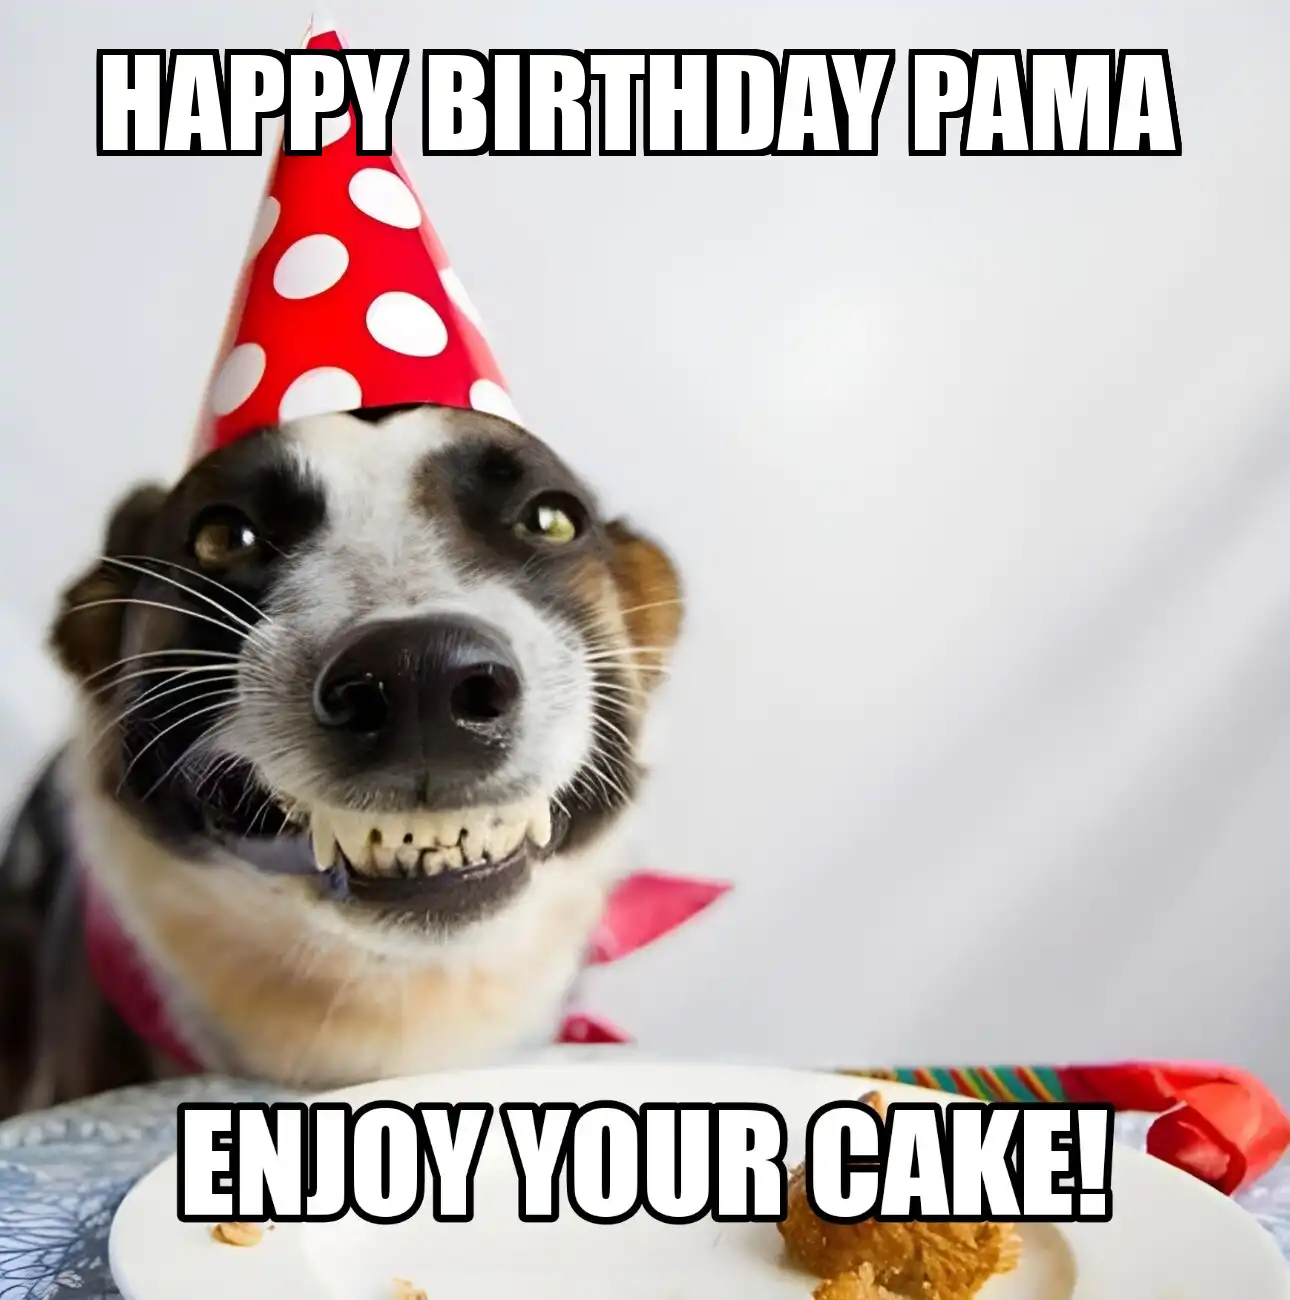 Happy Birthday Pama Enjoy Your Cake Dog Meme